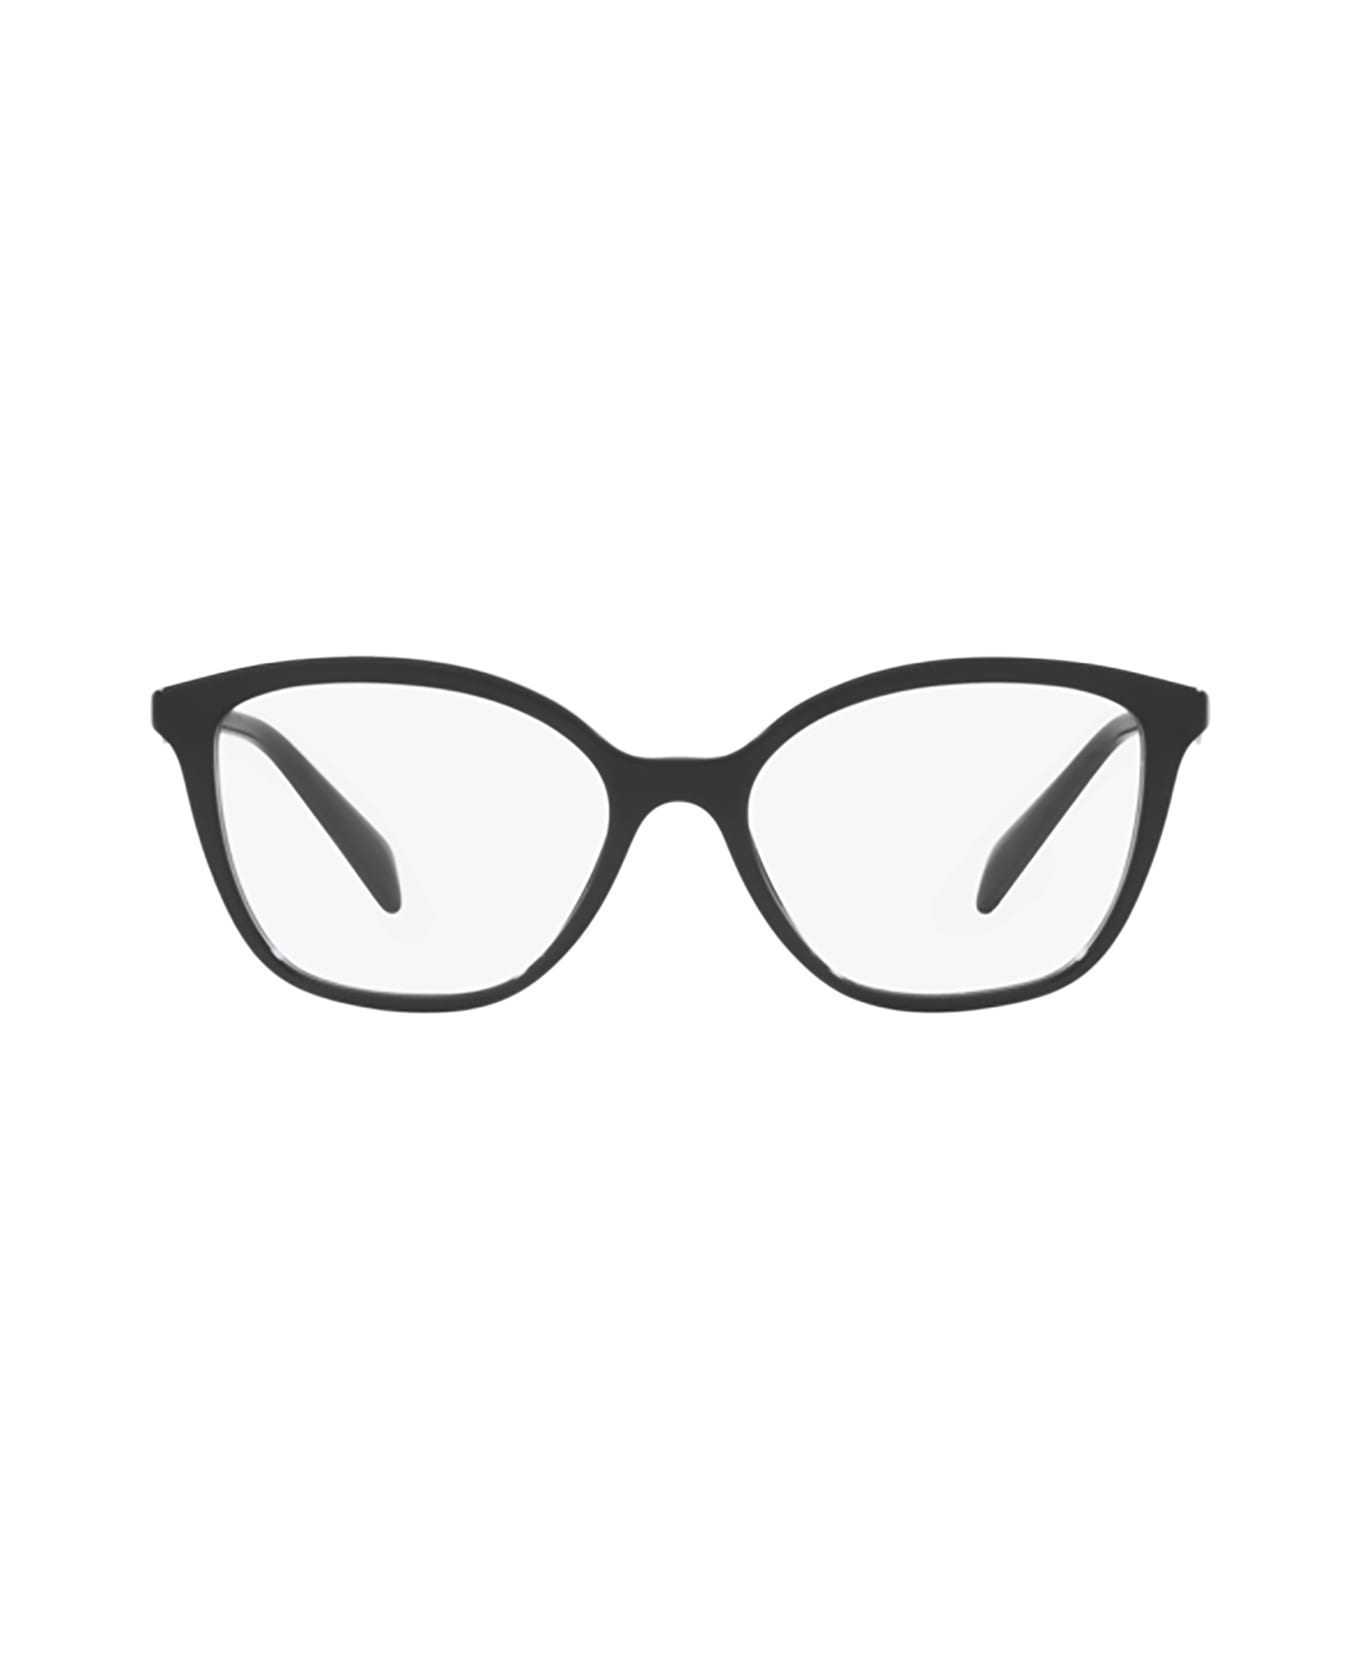 Prada Eyewear Pr 02zv Black Glasses - Black